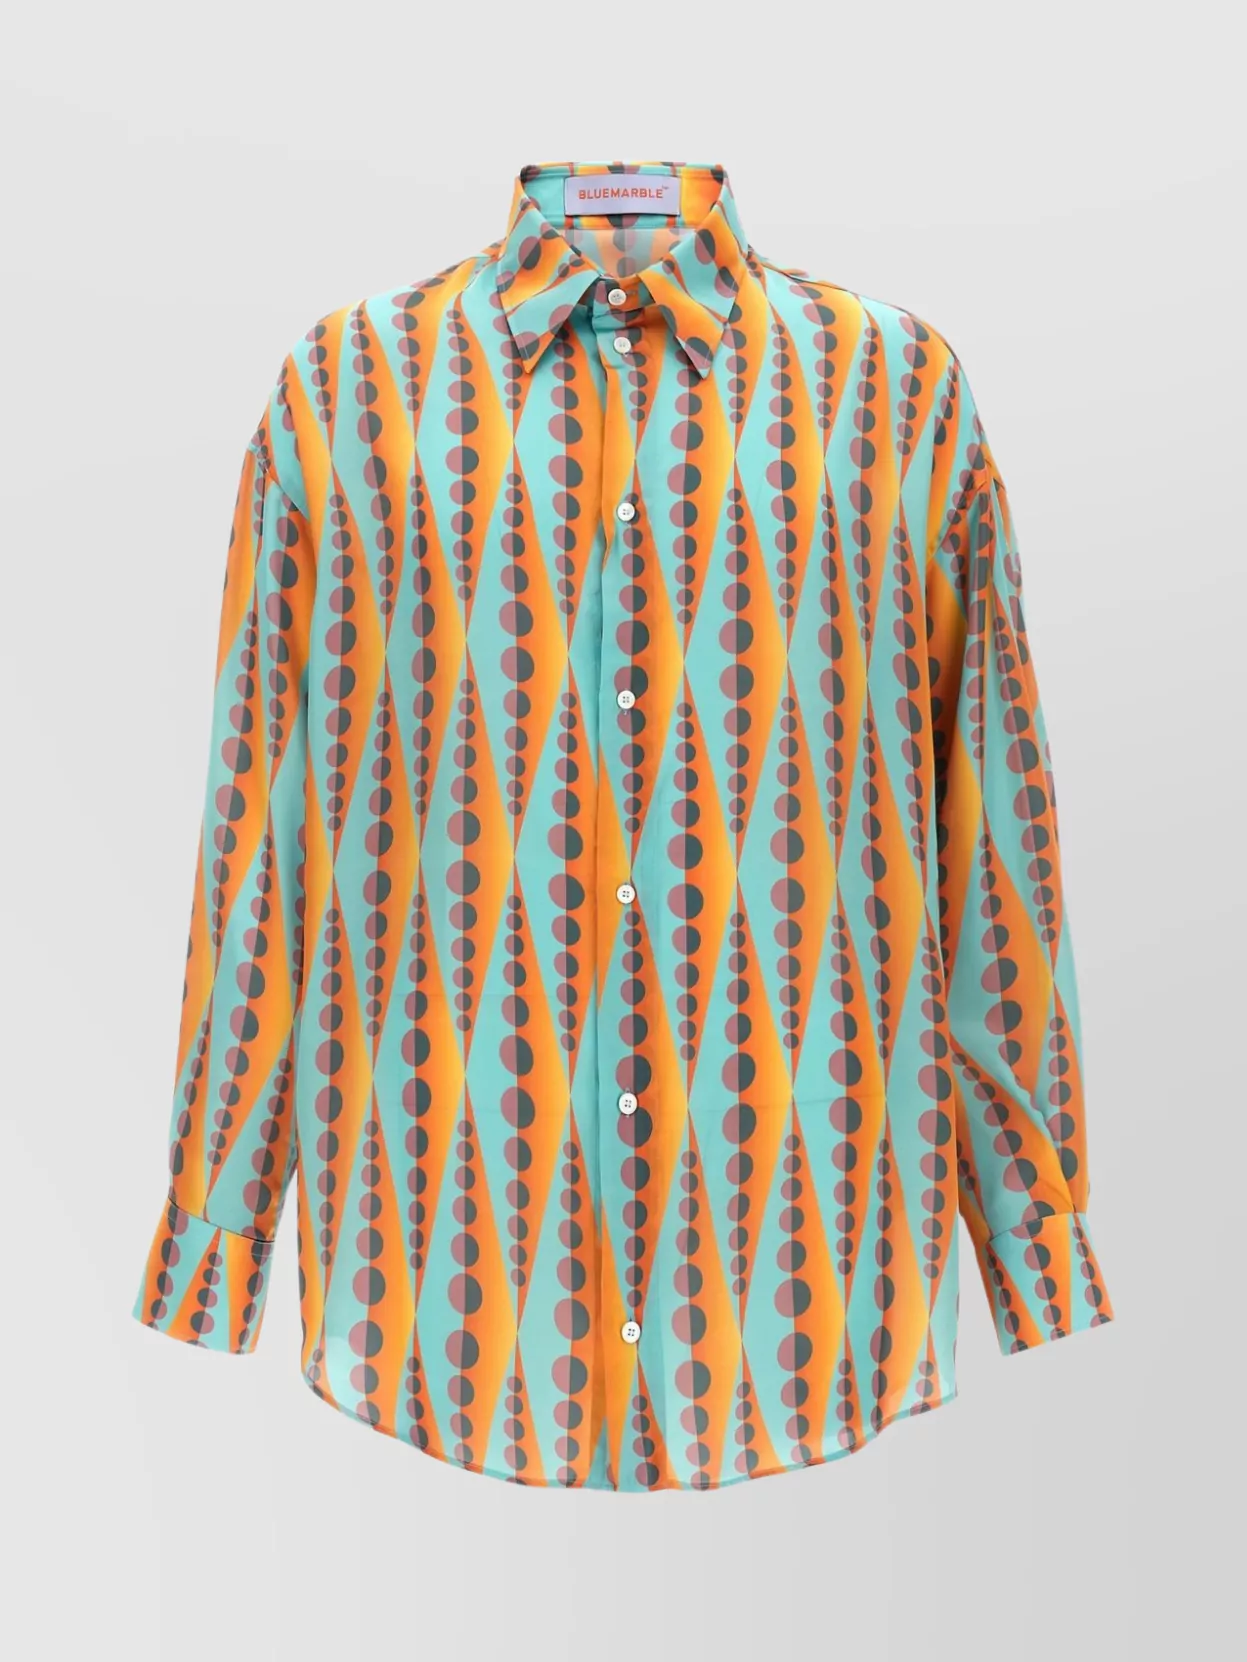 Bluemarble 'geometric Pattern' Long Sleeve Shirt